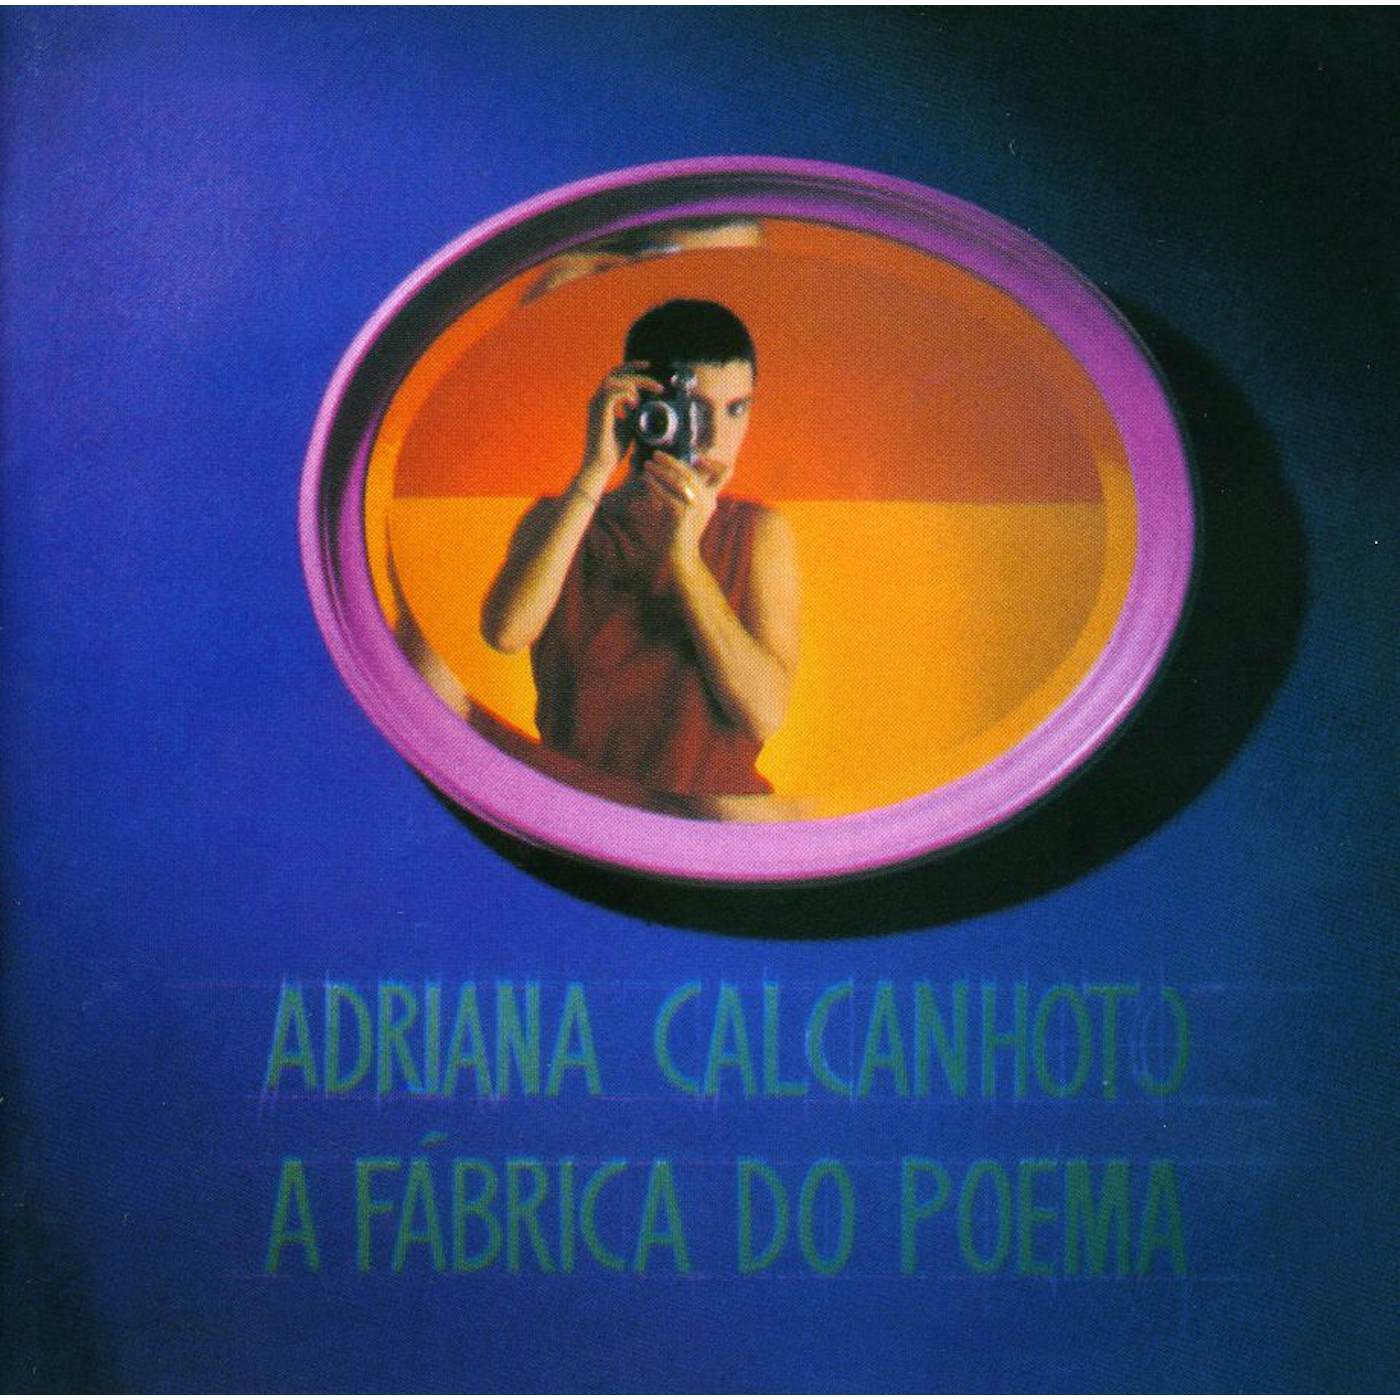 Adriana Calcanhotto FABRICA DO POEMA CD